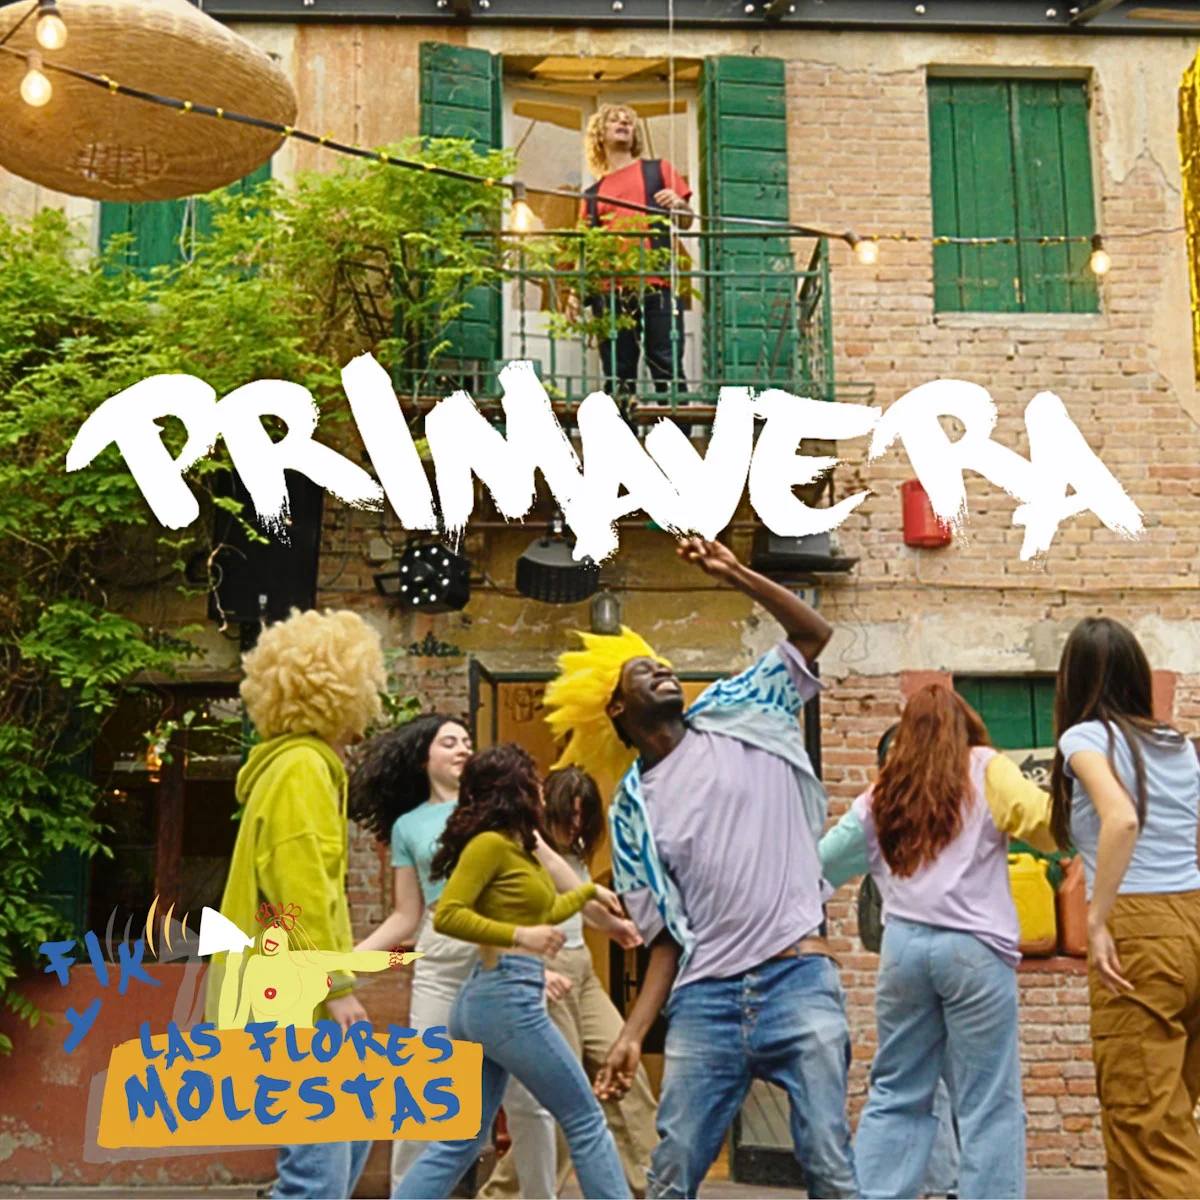 FIK Y LAS FLORES MOLESTAS: dal 19 aprile fuori il nuovo album “PRIMAVERA”